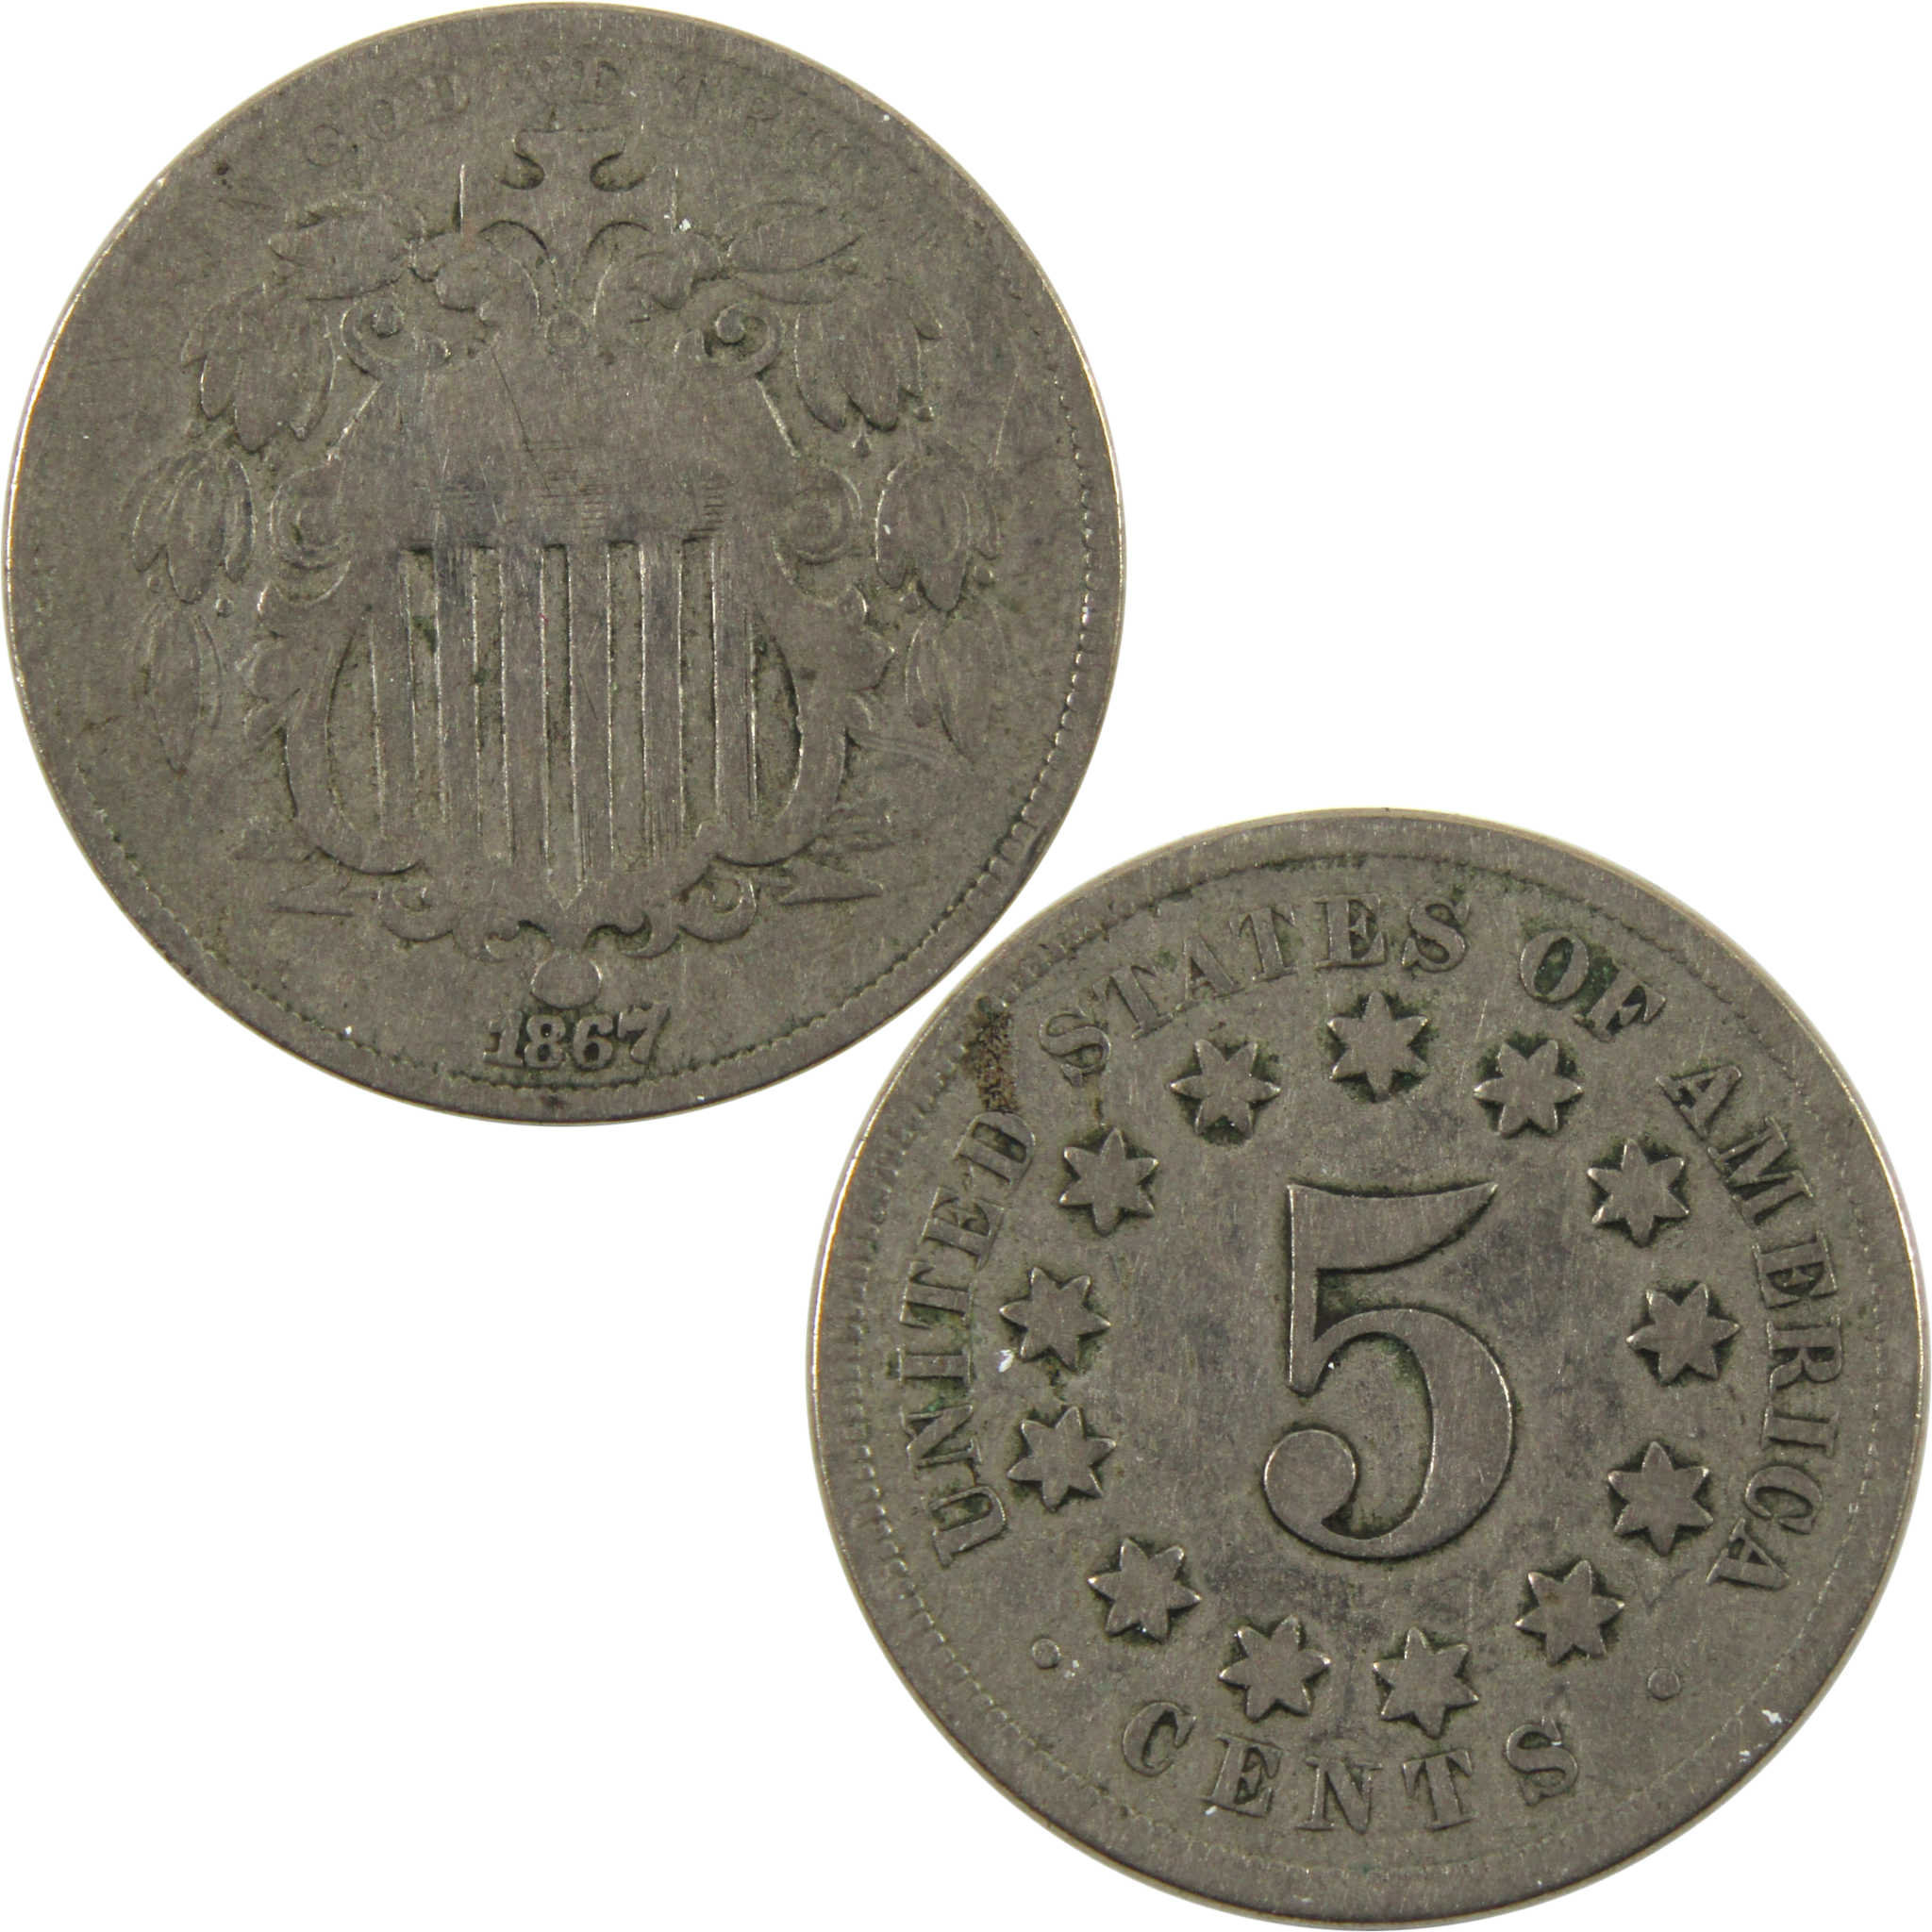 1867 Rays Shield Nickel VG Very Good 5c Coin SKU:I10222